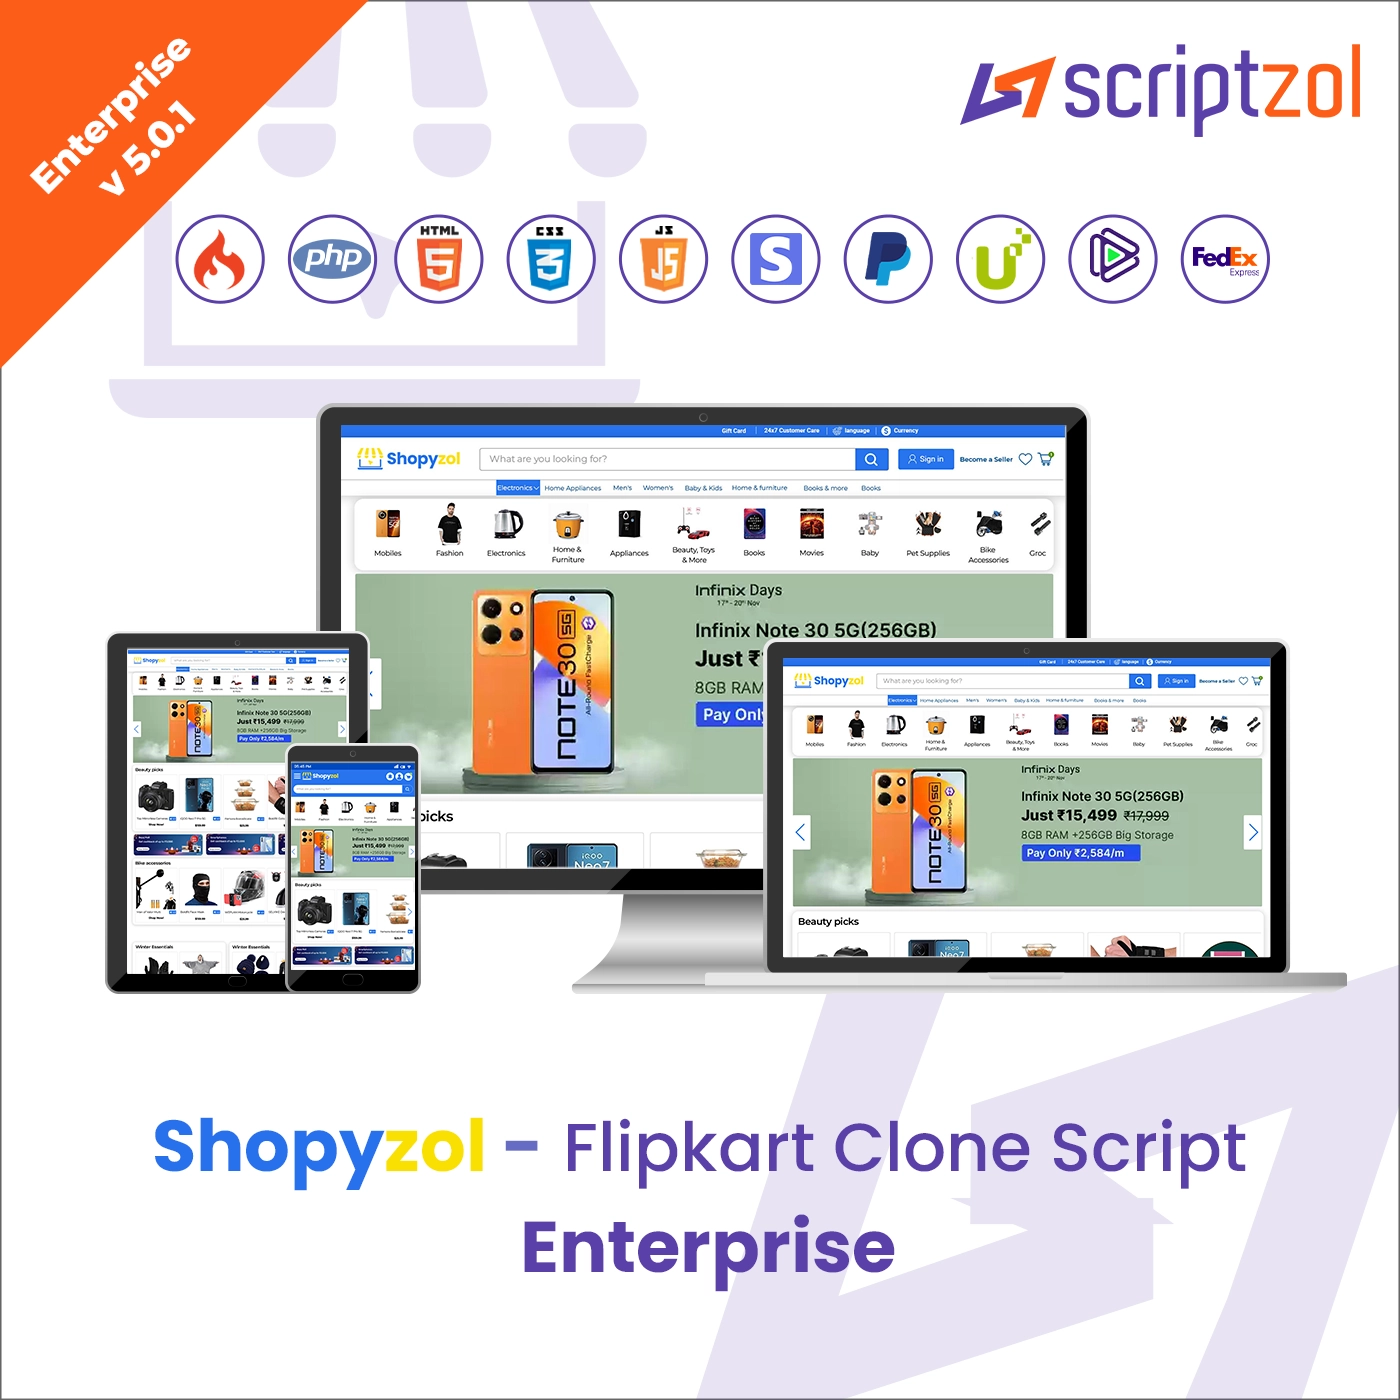 Shopyzol - Flipkart Clone Script Enterprise